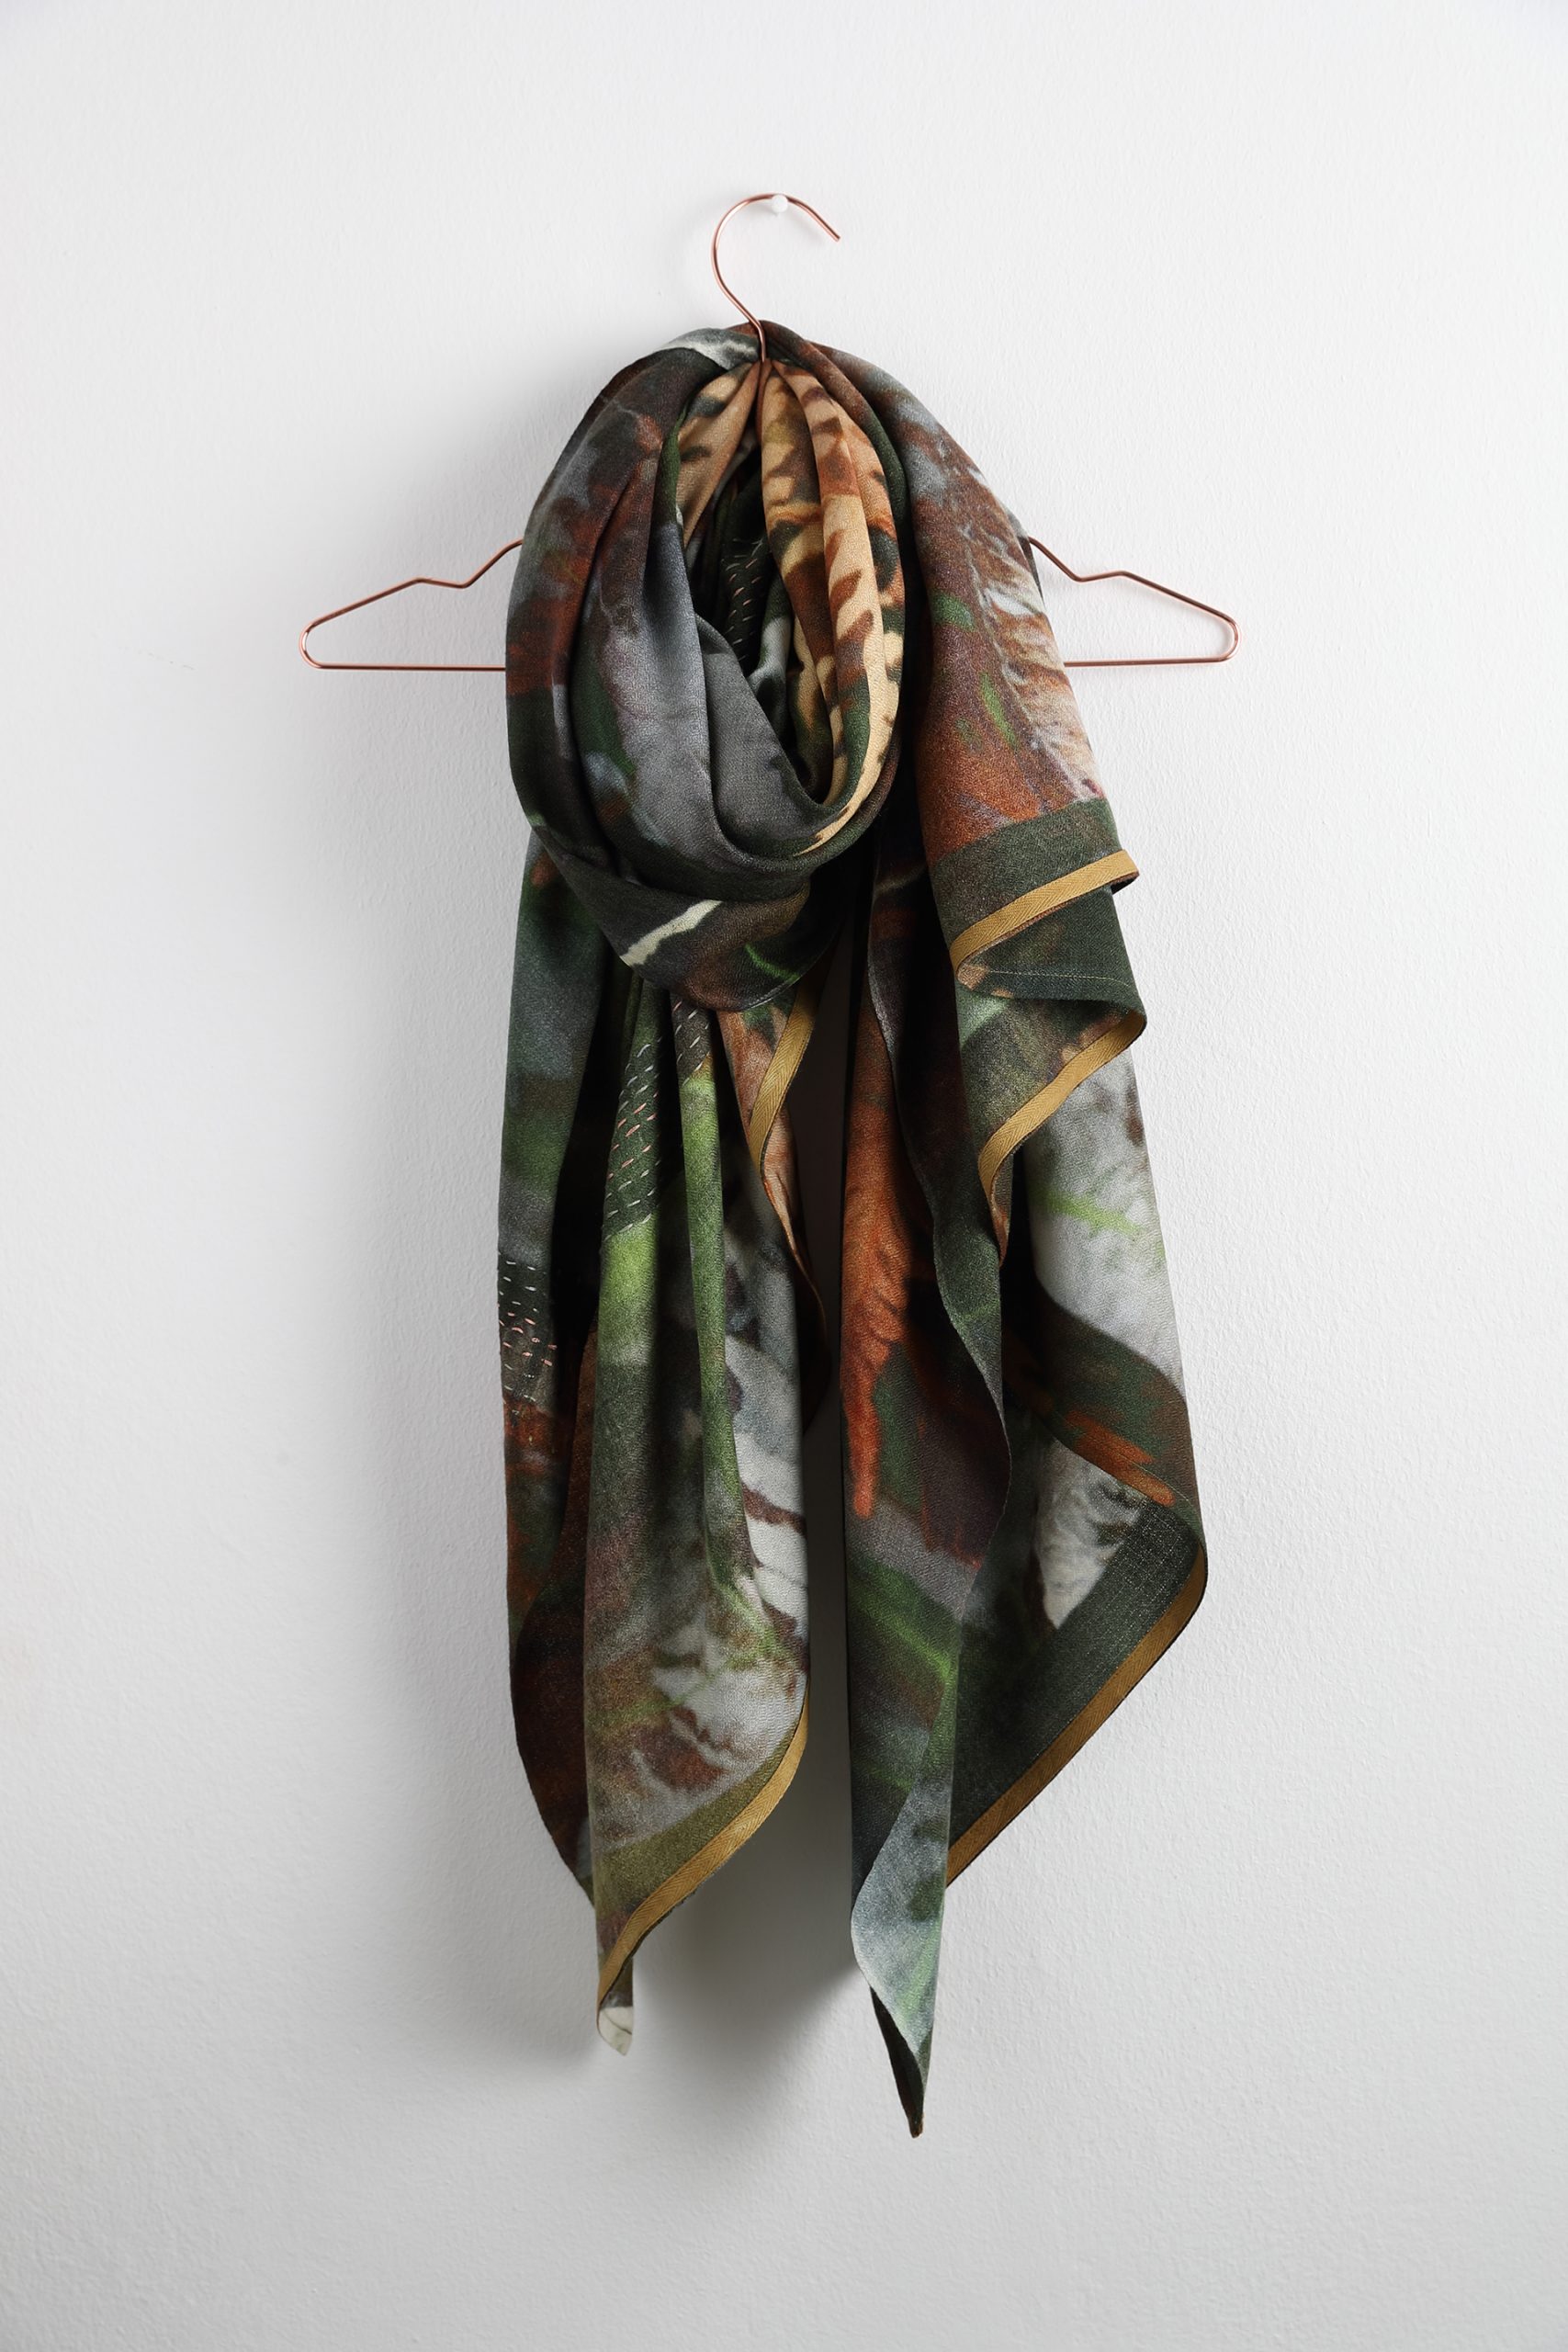 A beautiful Huckhl scarf draped around a hanger.